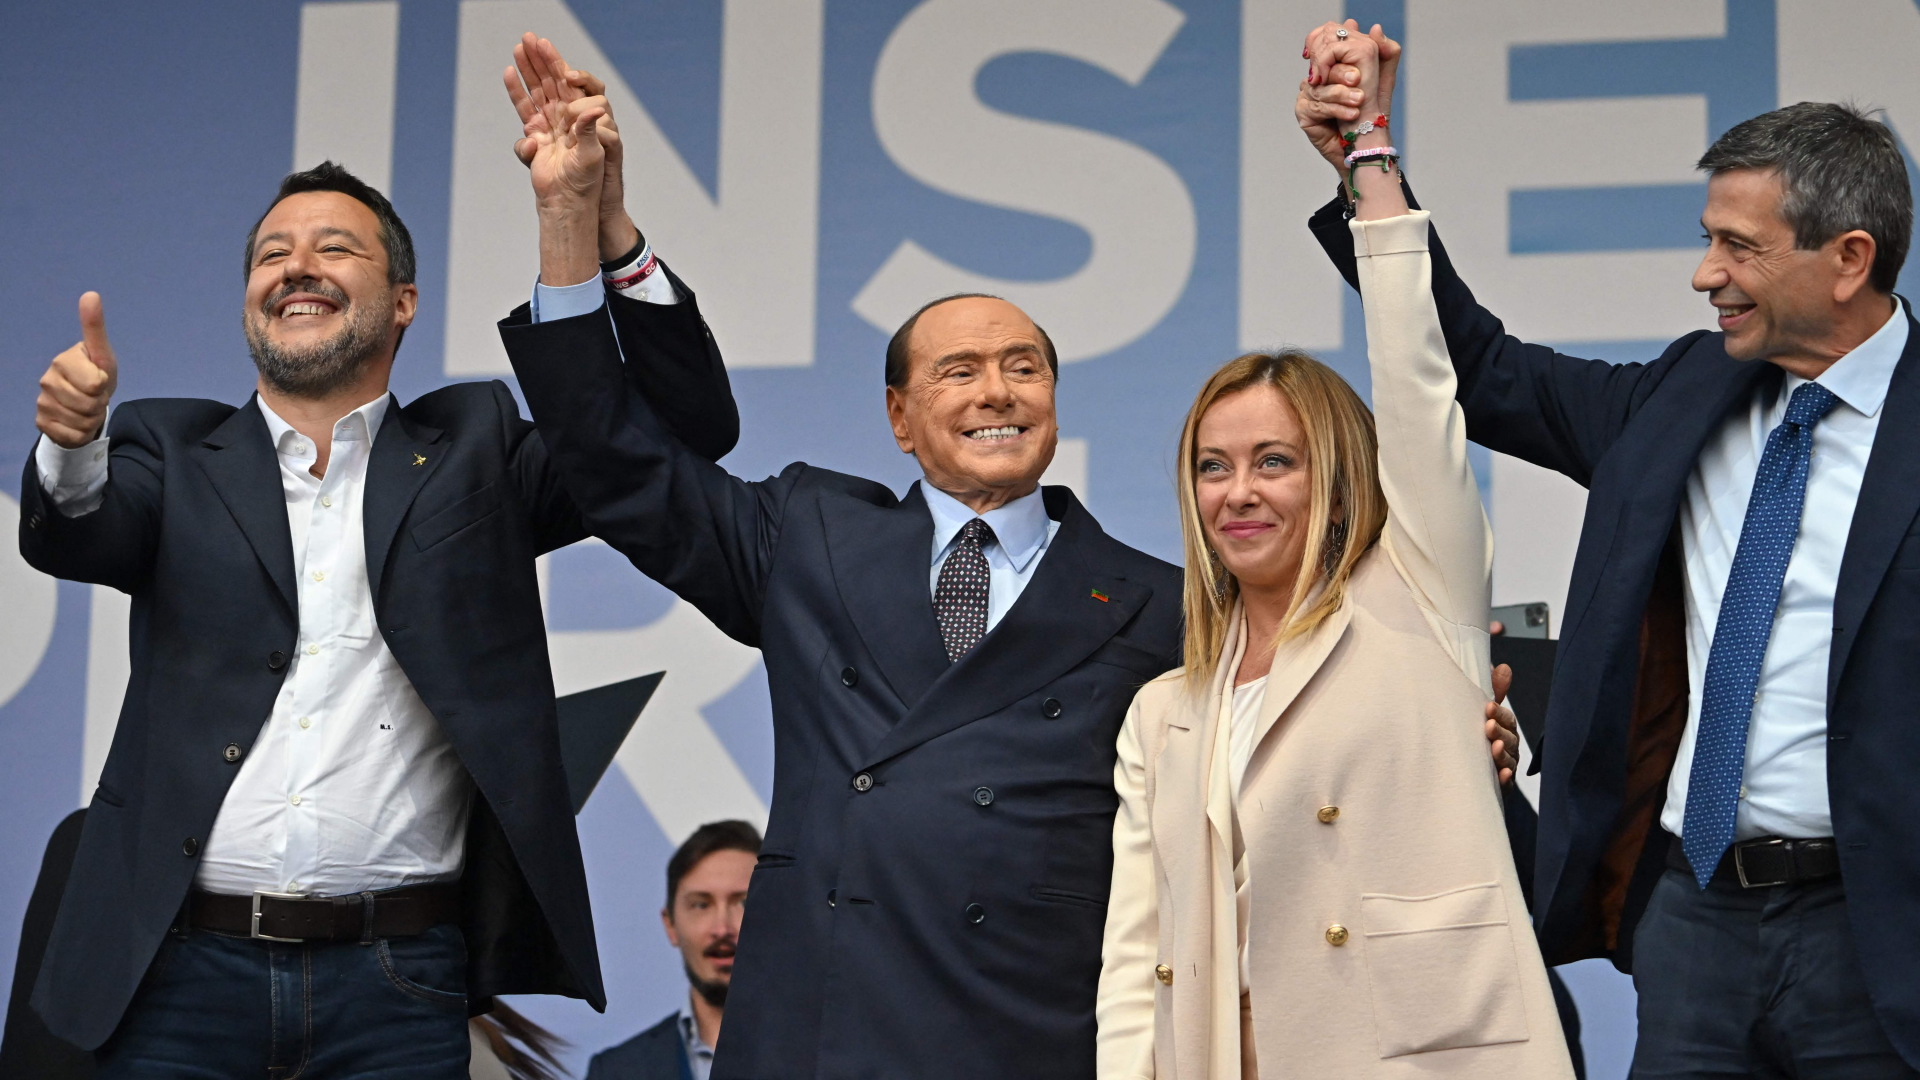 Matteo Salvini, Silvio Berlusconi und Giorgia Meloni gemeinsam auf der Bühne | AFP